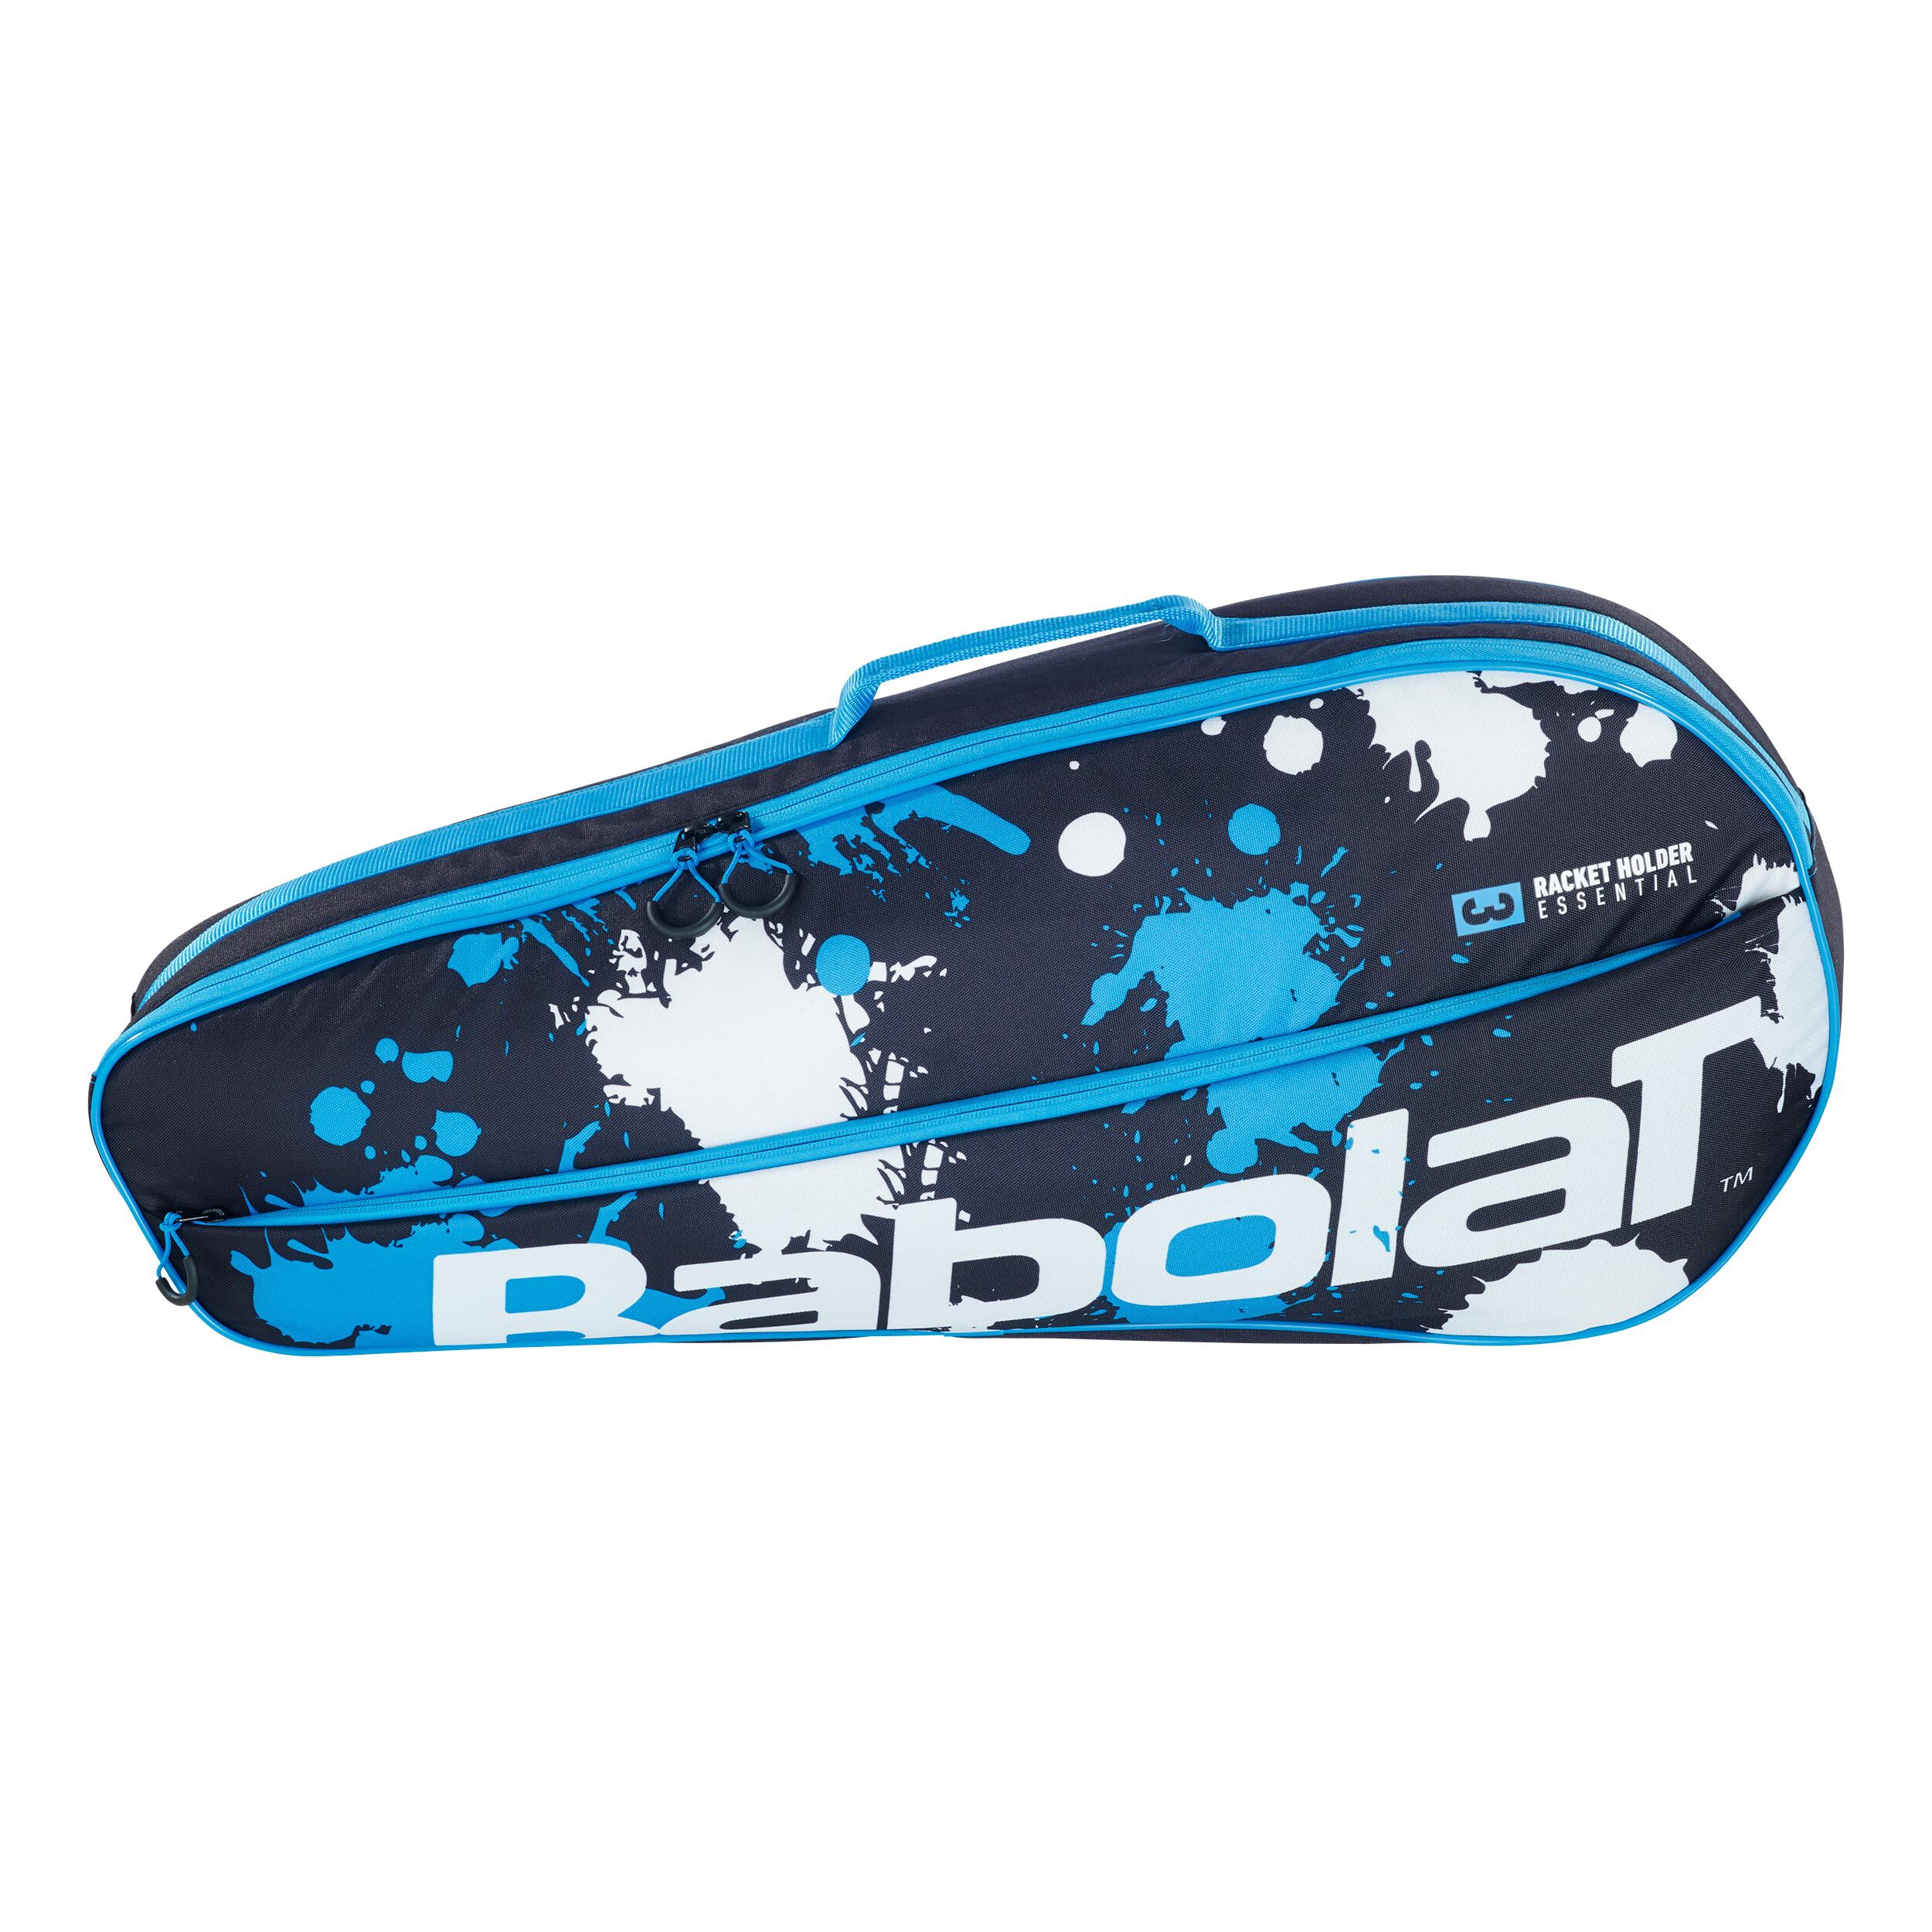 BABOLAT ESSENTIAL TENNIS RACKET HOLDER 2-3 BAGS BLUE BLACK FREE UK 48 TRACKED 